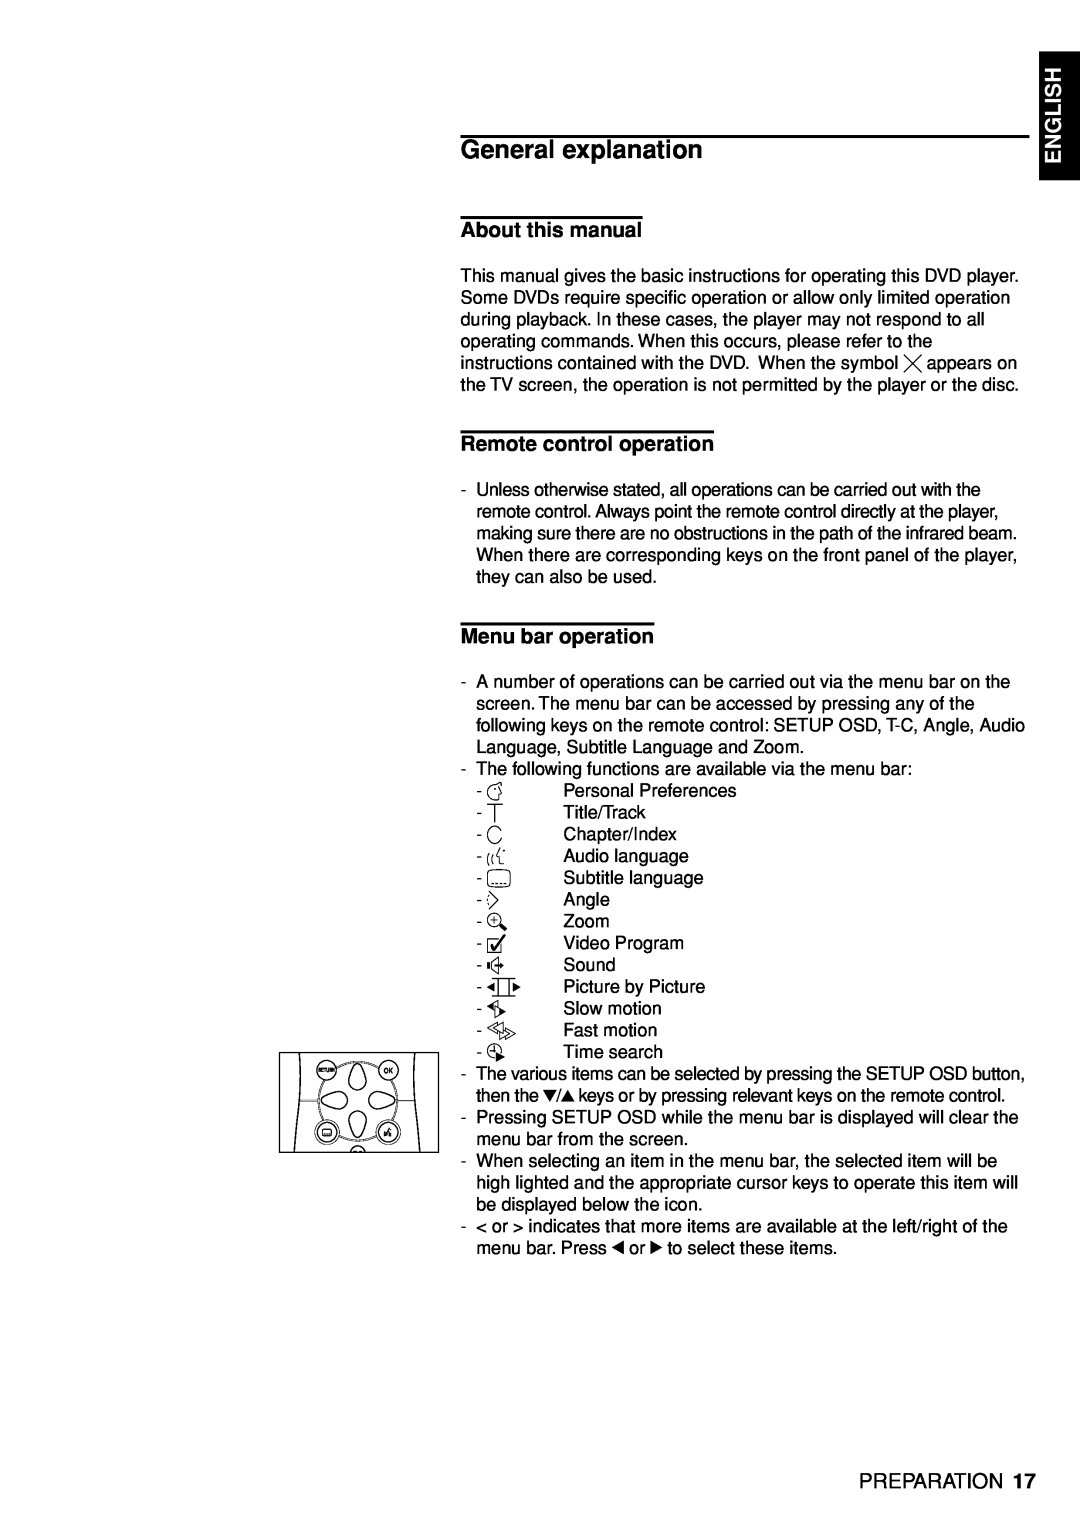 Marantz DV4100 General explanation, About this manual, Remote control operation, Menu bar operation, English 